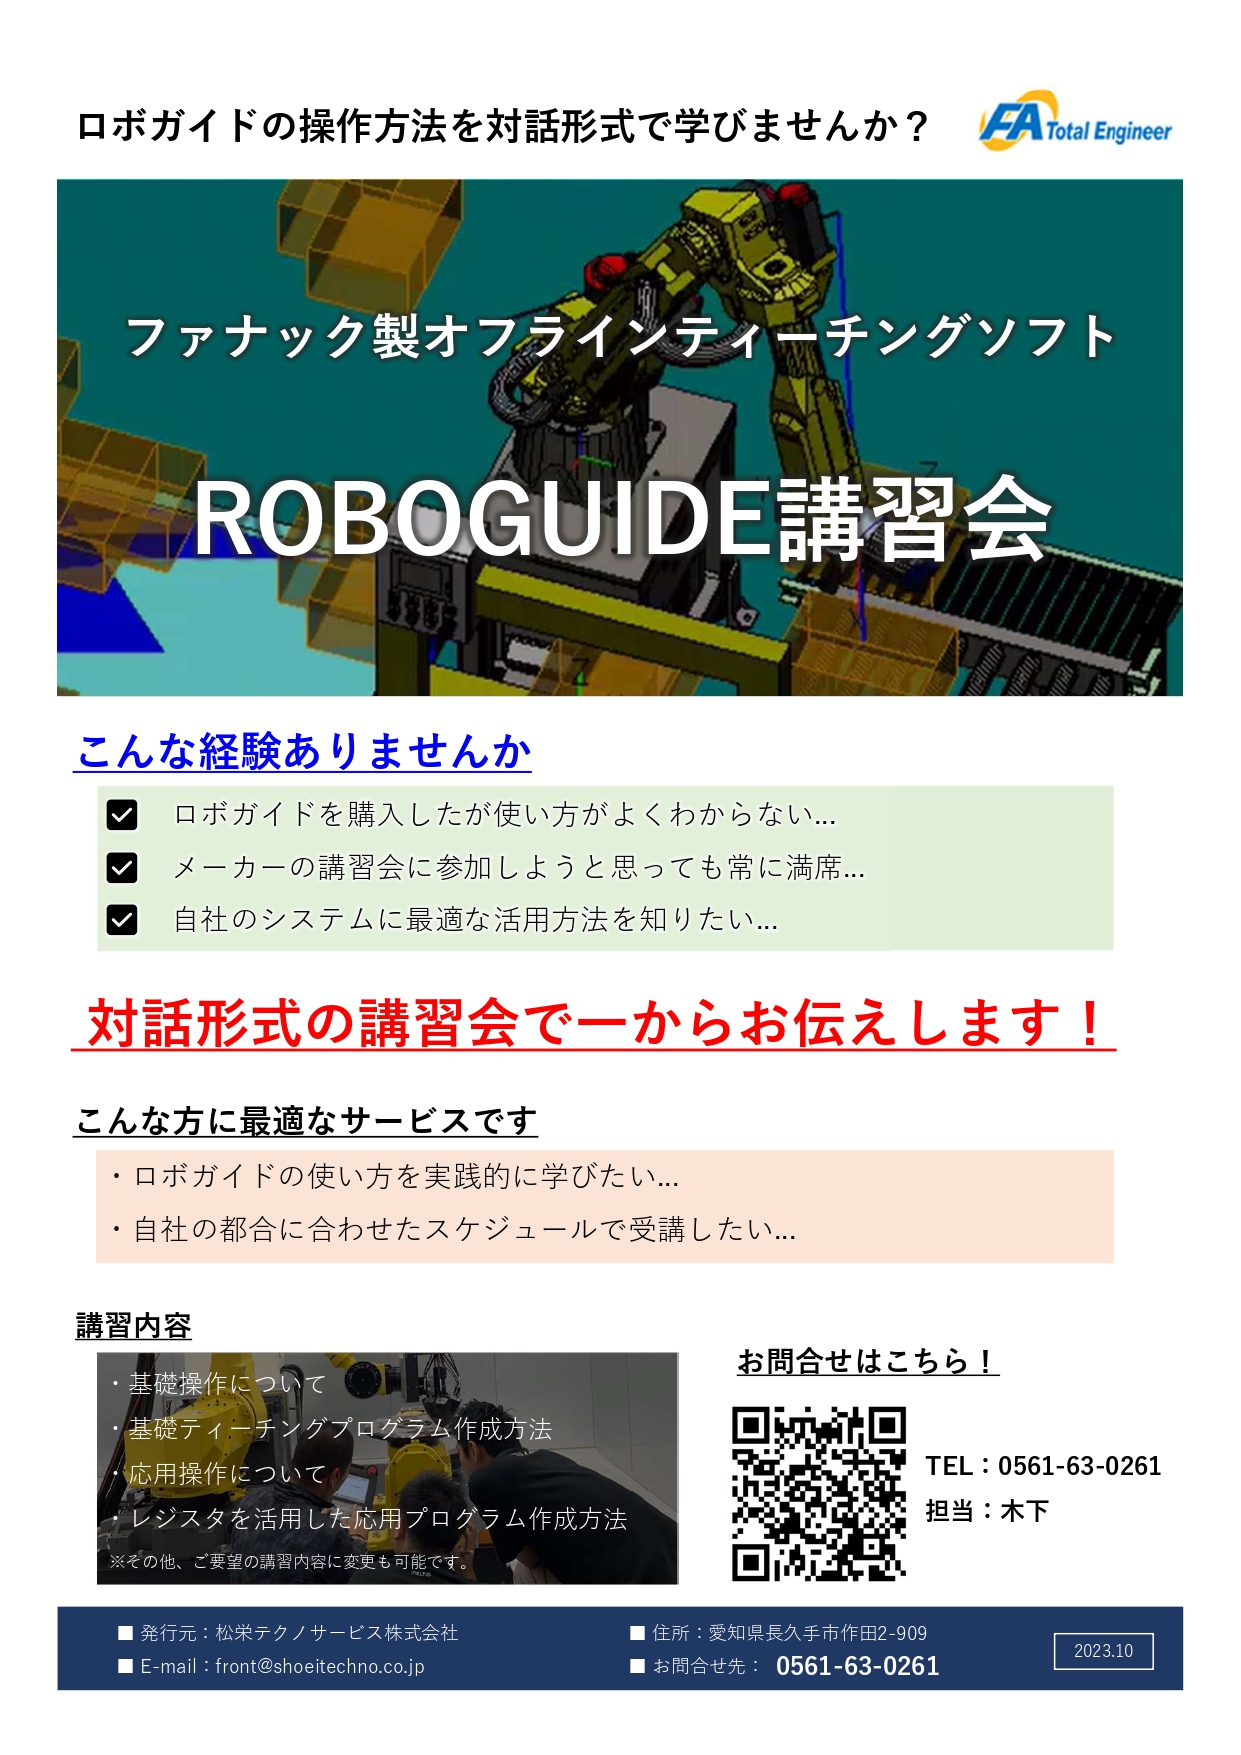 ROBOGUIDE（ロボガイド）操作講習会 開催のお知らせ